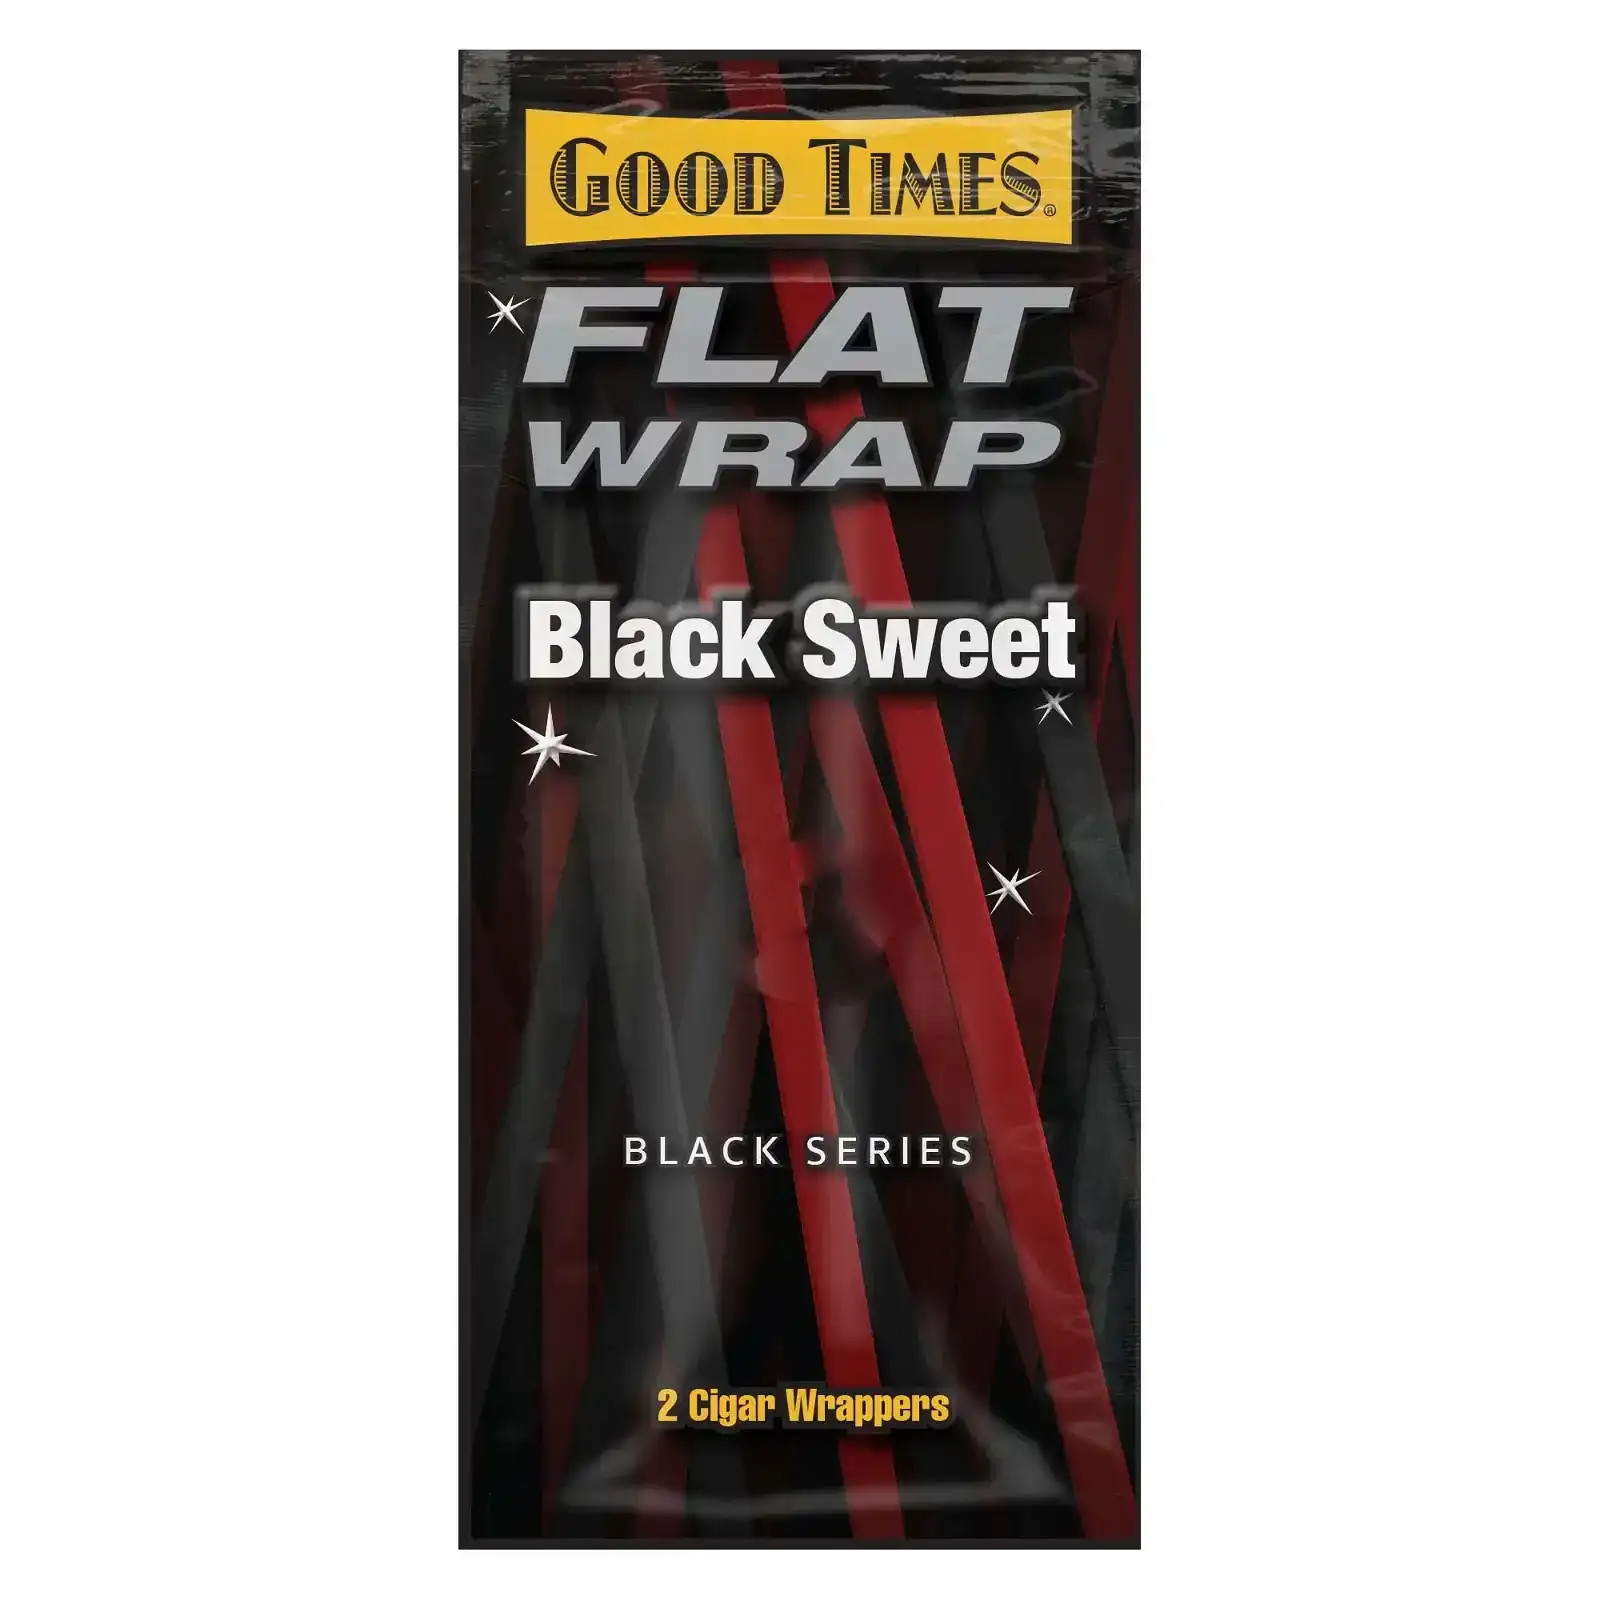 Good Times Black Sweet Flat Wraps